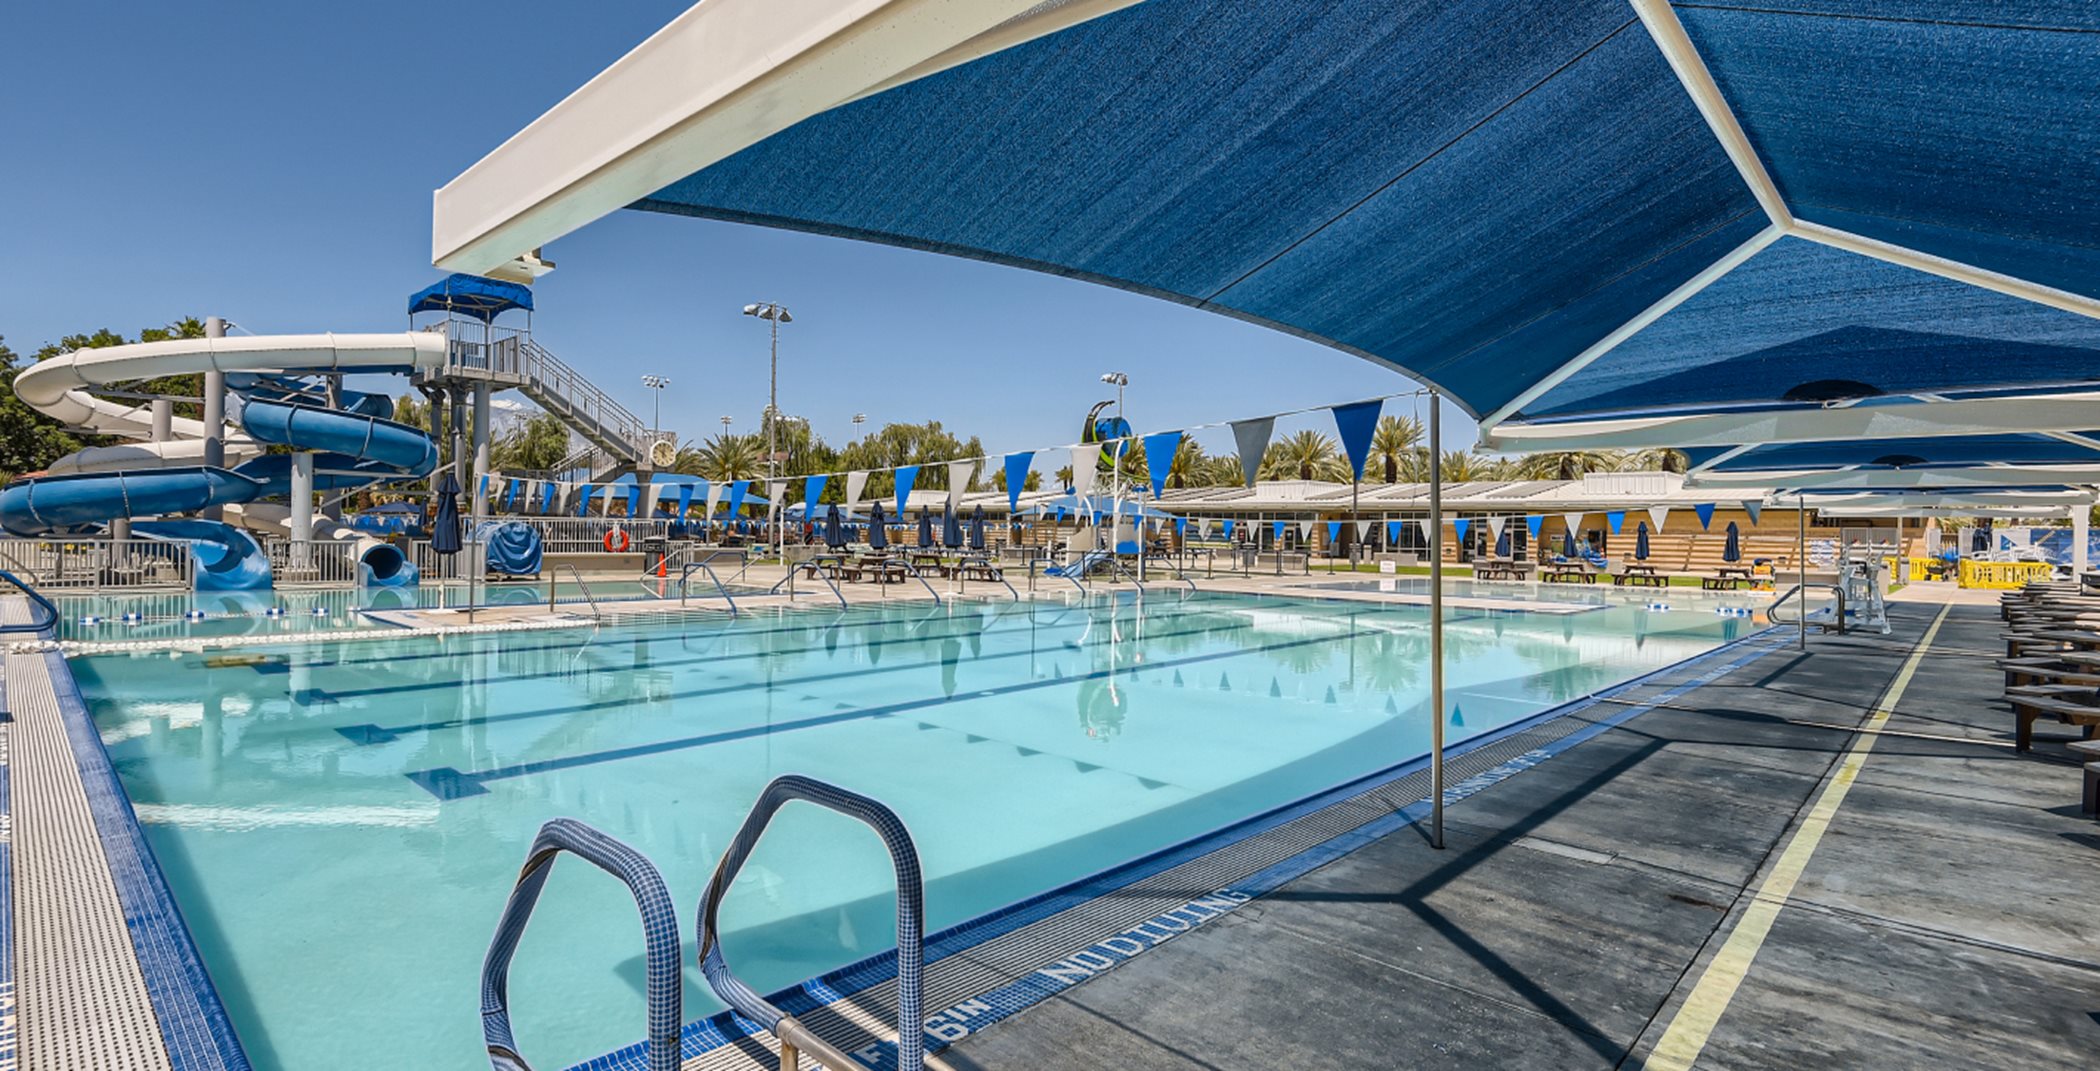 Pool at the Palm Desert Aquatic Center